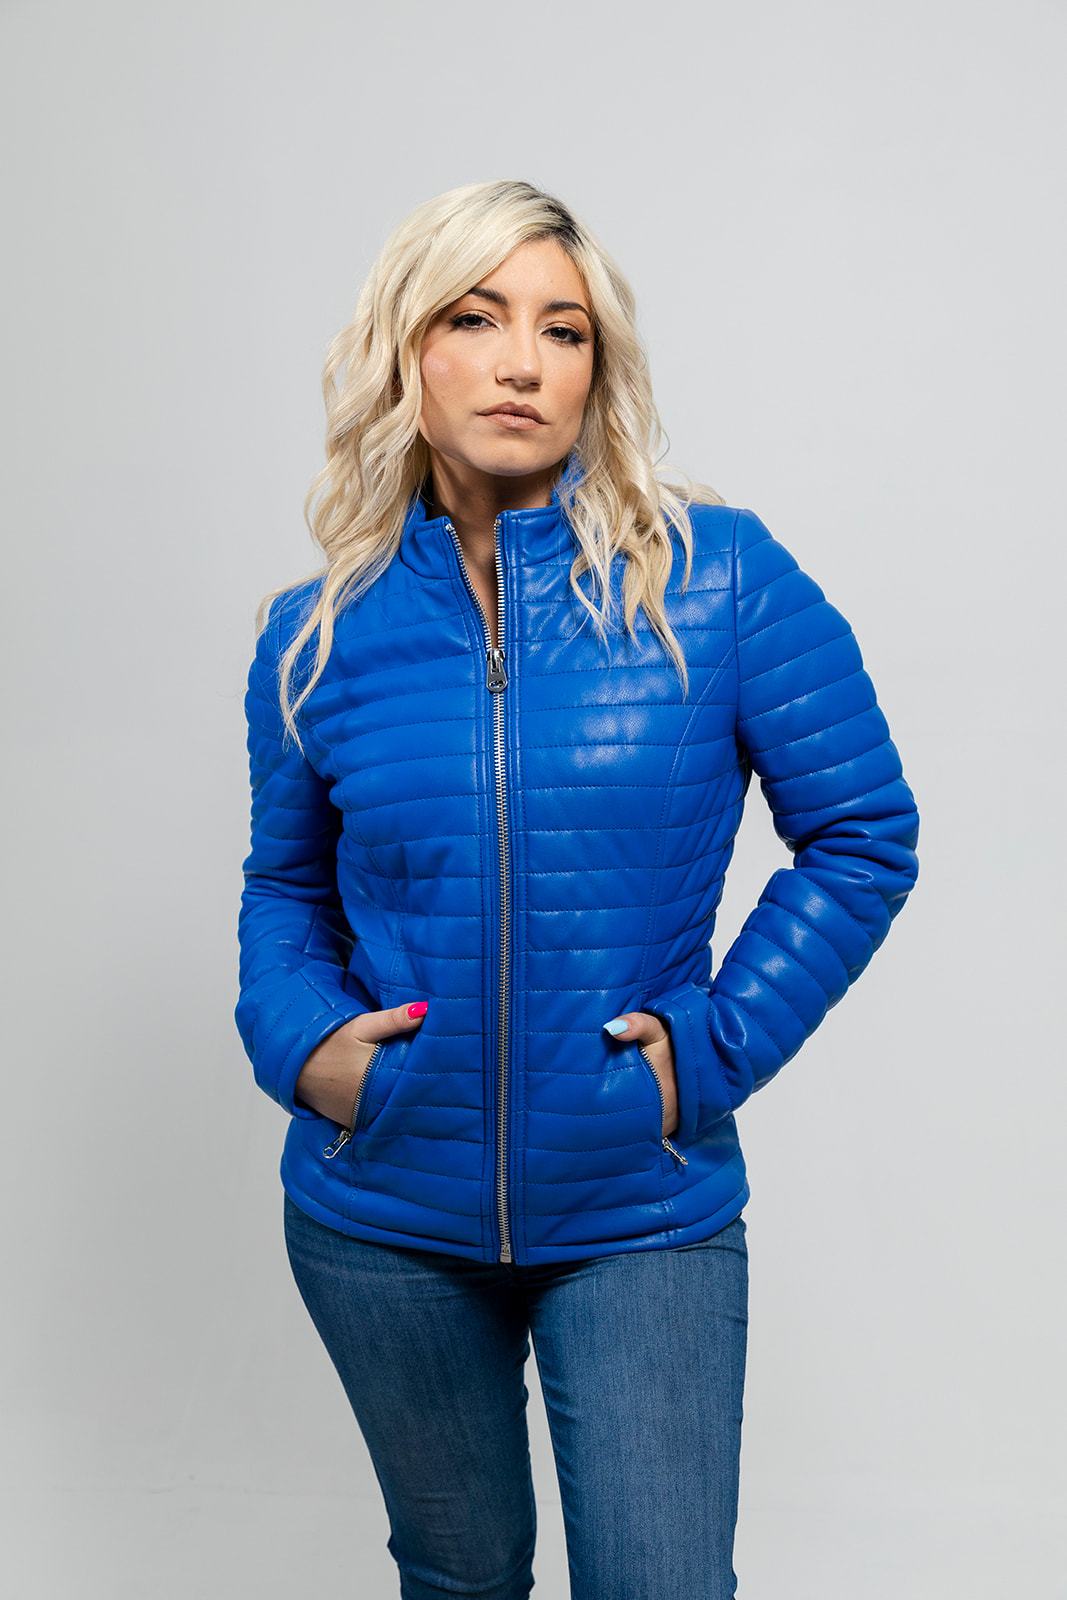 Skylar - Women's Vegan Faux Leather Jacket Jacket Best Leather Ny XS Blue 